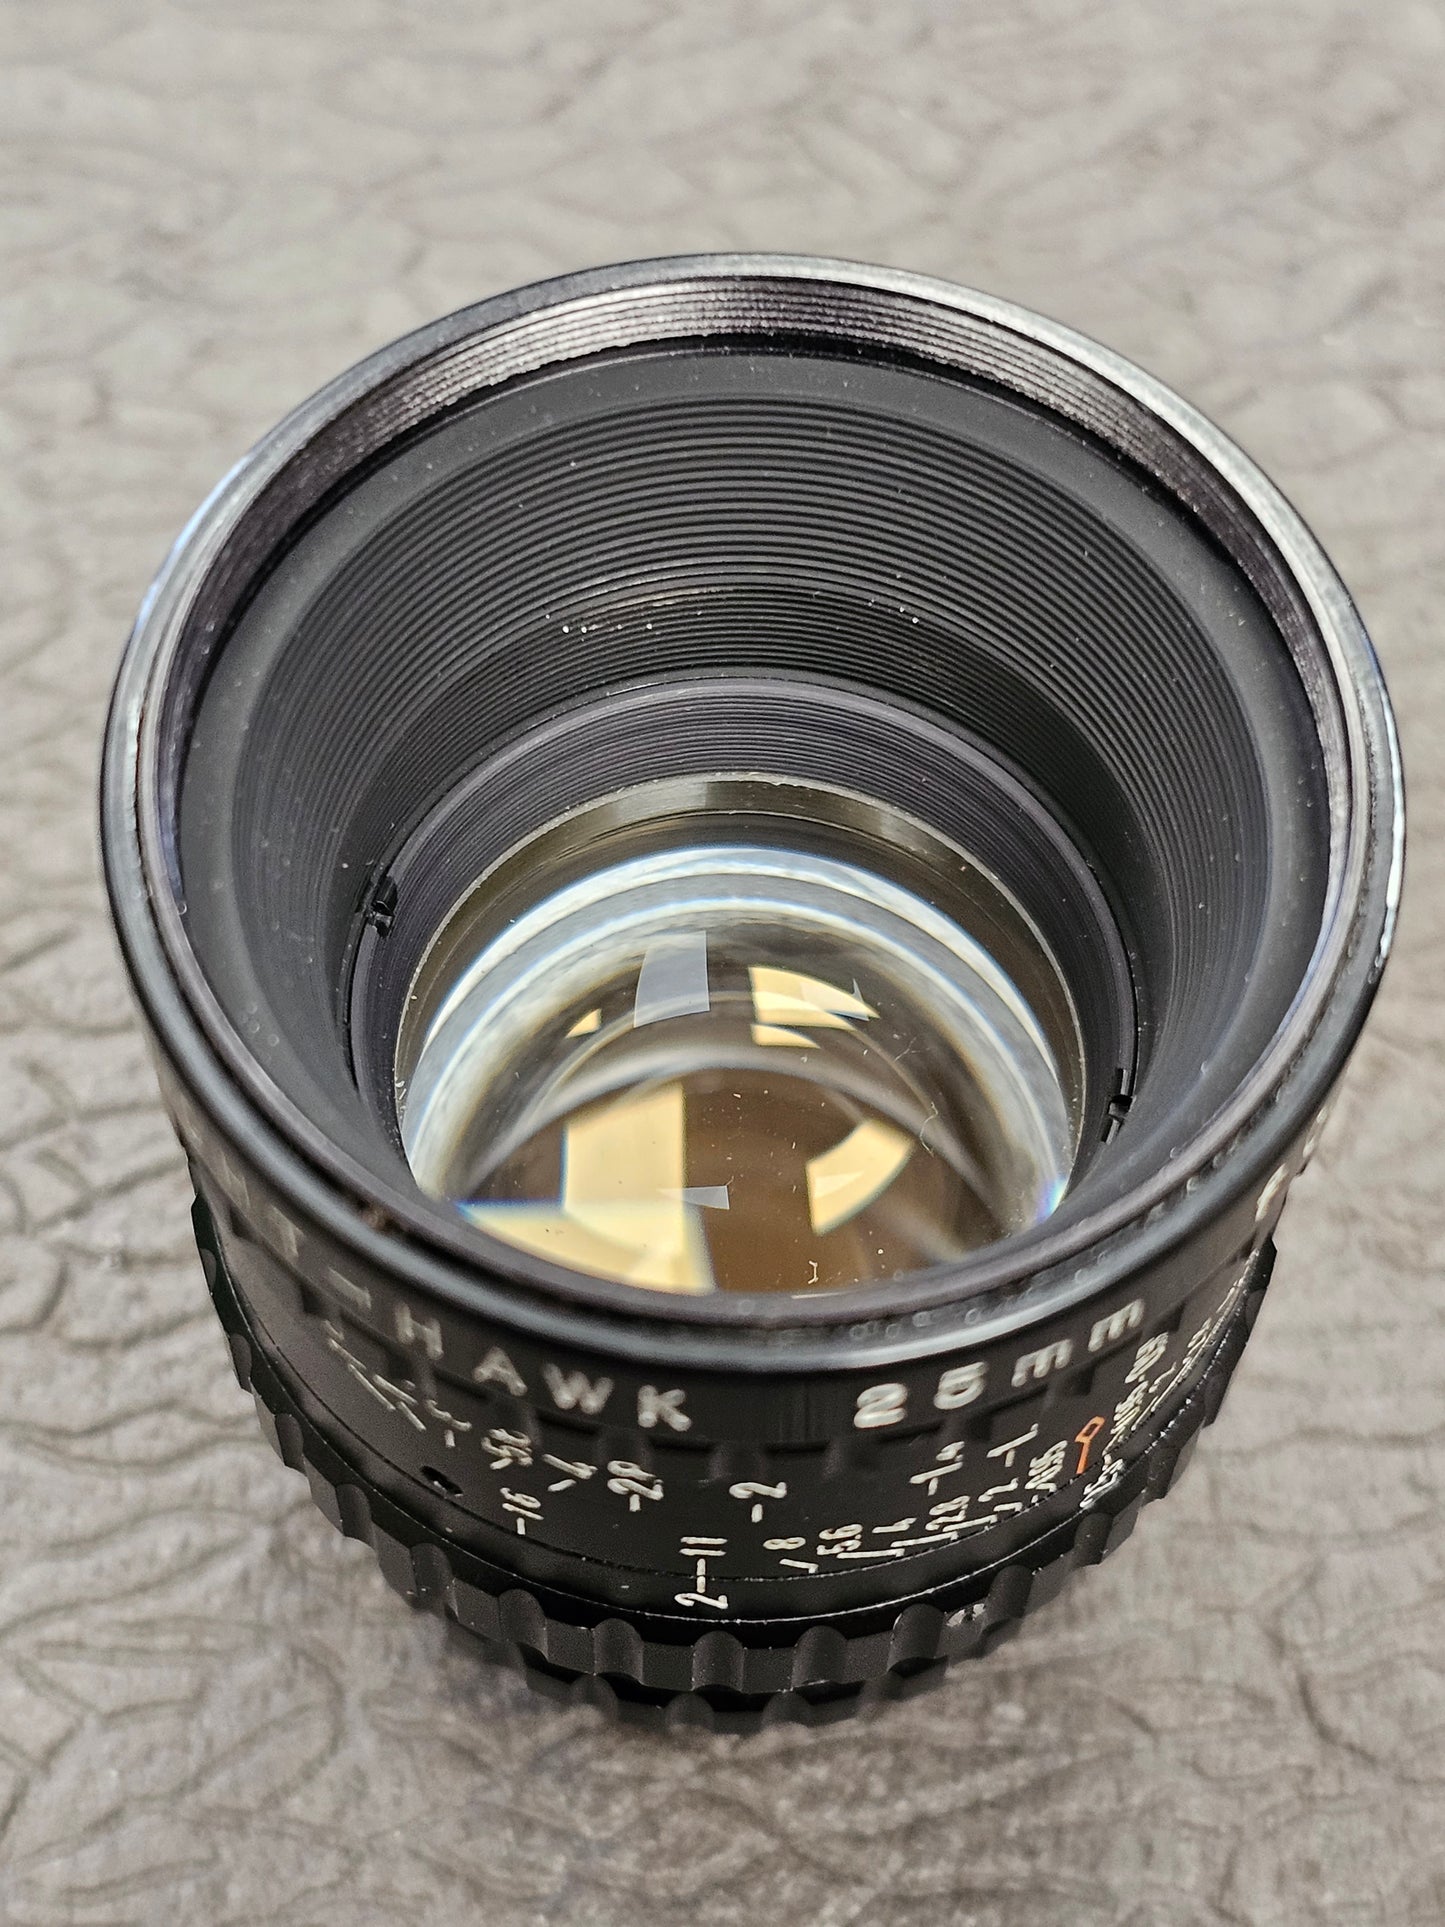 Century Night-Hawk 25mm f0.95 C-mount lens S# 9225